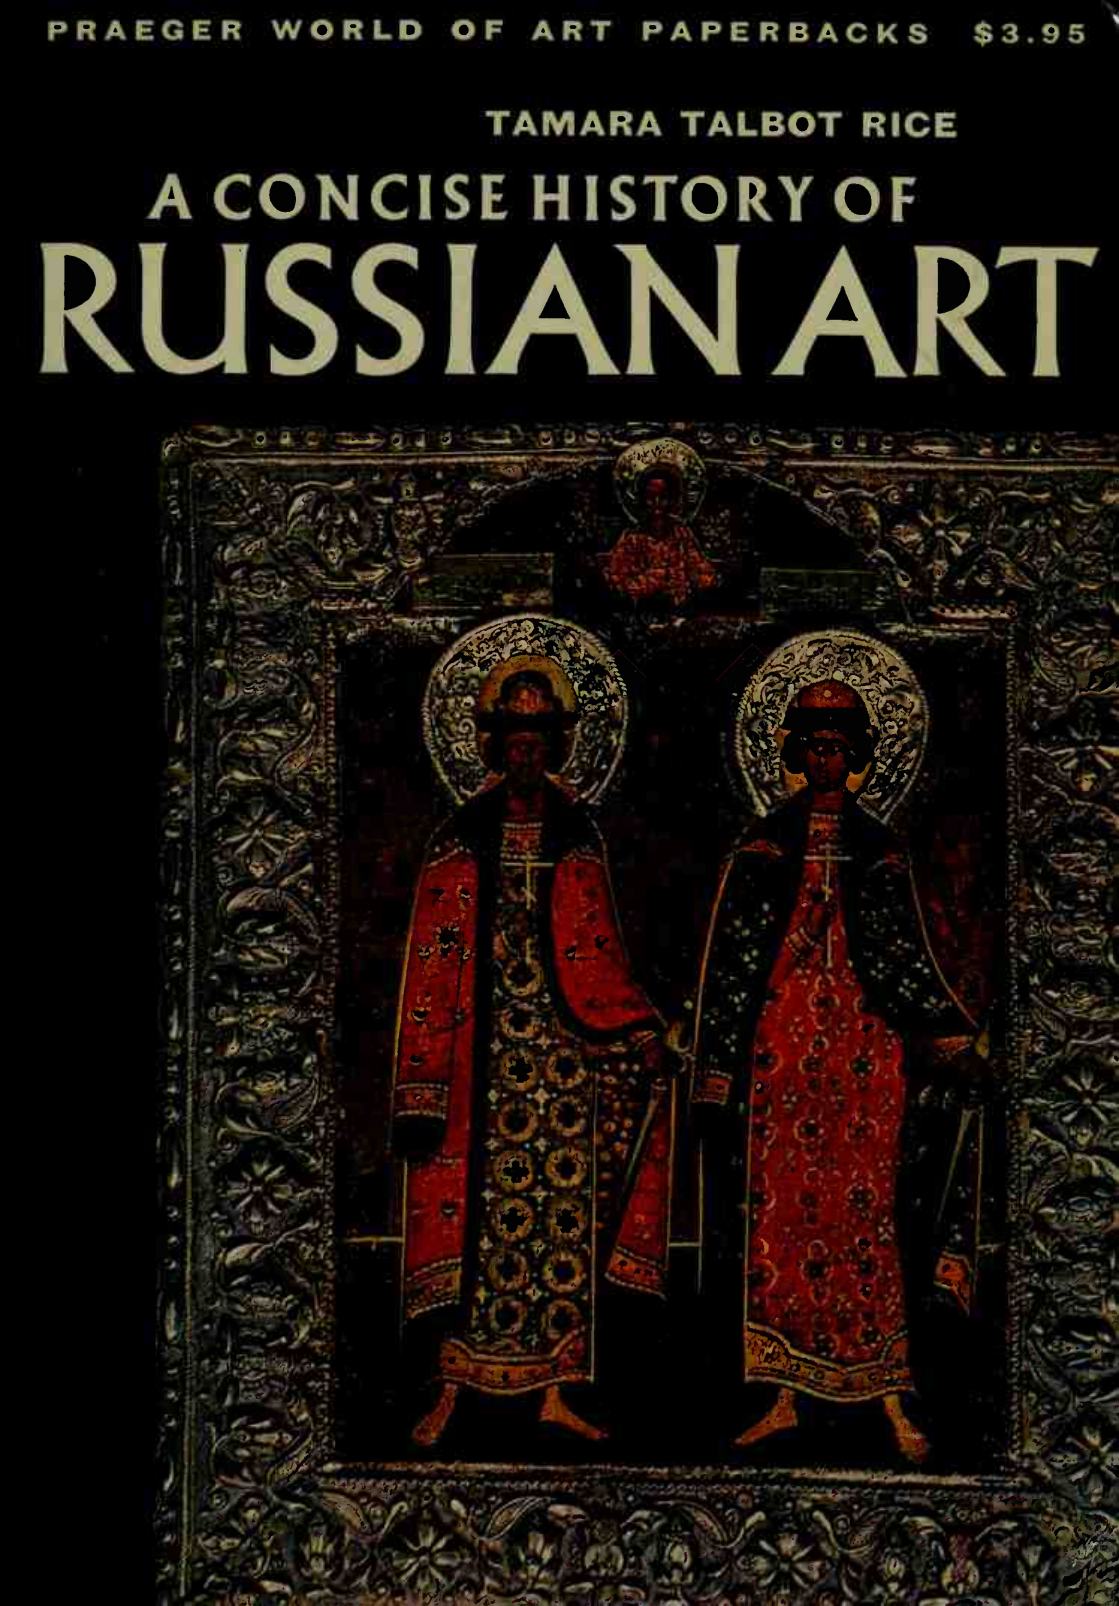 A concise history of Russian art / Tamara Talbot Rice. — New York ; Washington : Frederick A. Praeger, Publishers, 1963